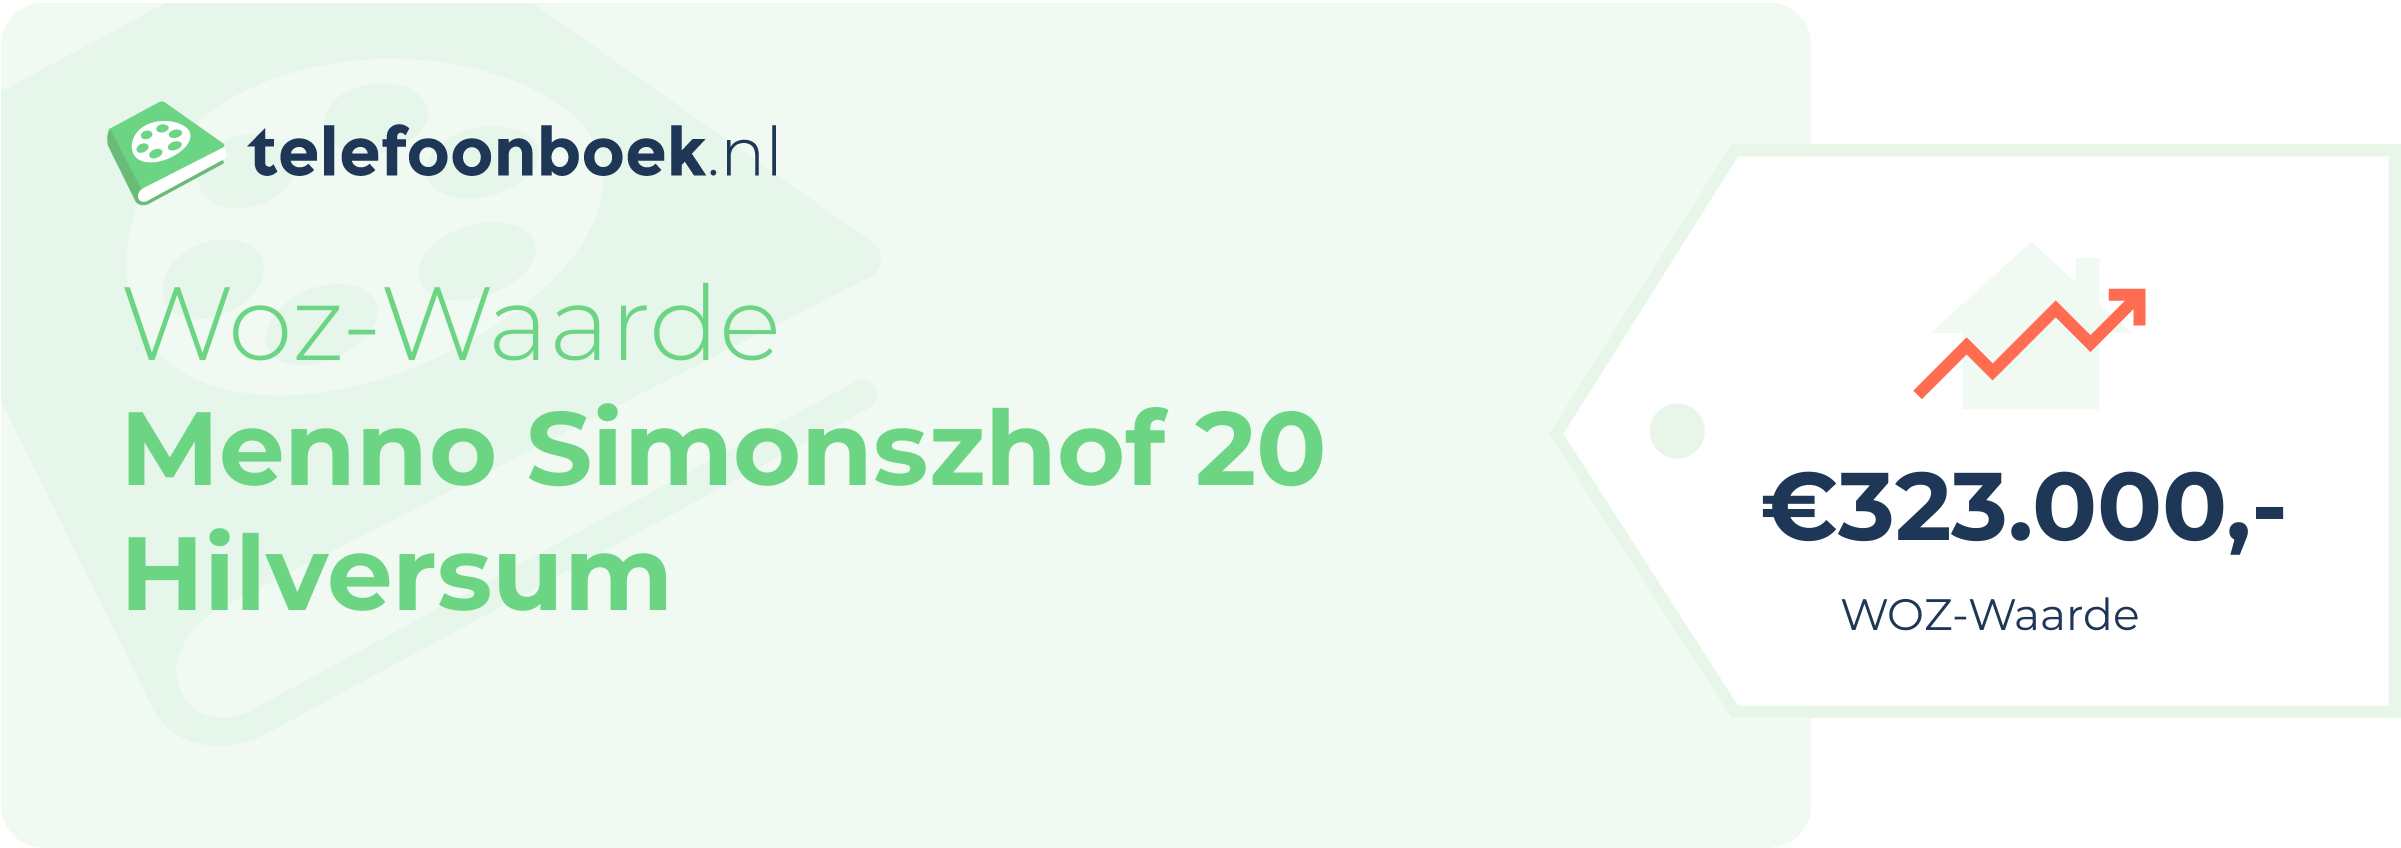 WOZ-waarde Menno Simonszhof 20 Hilversum